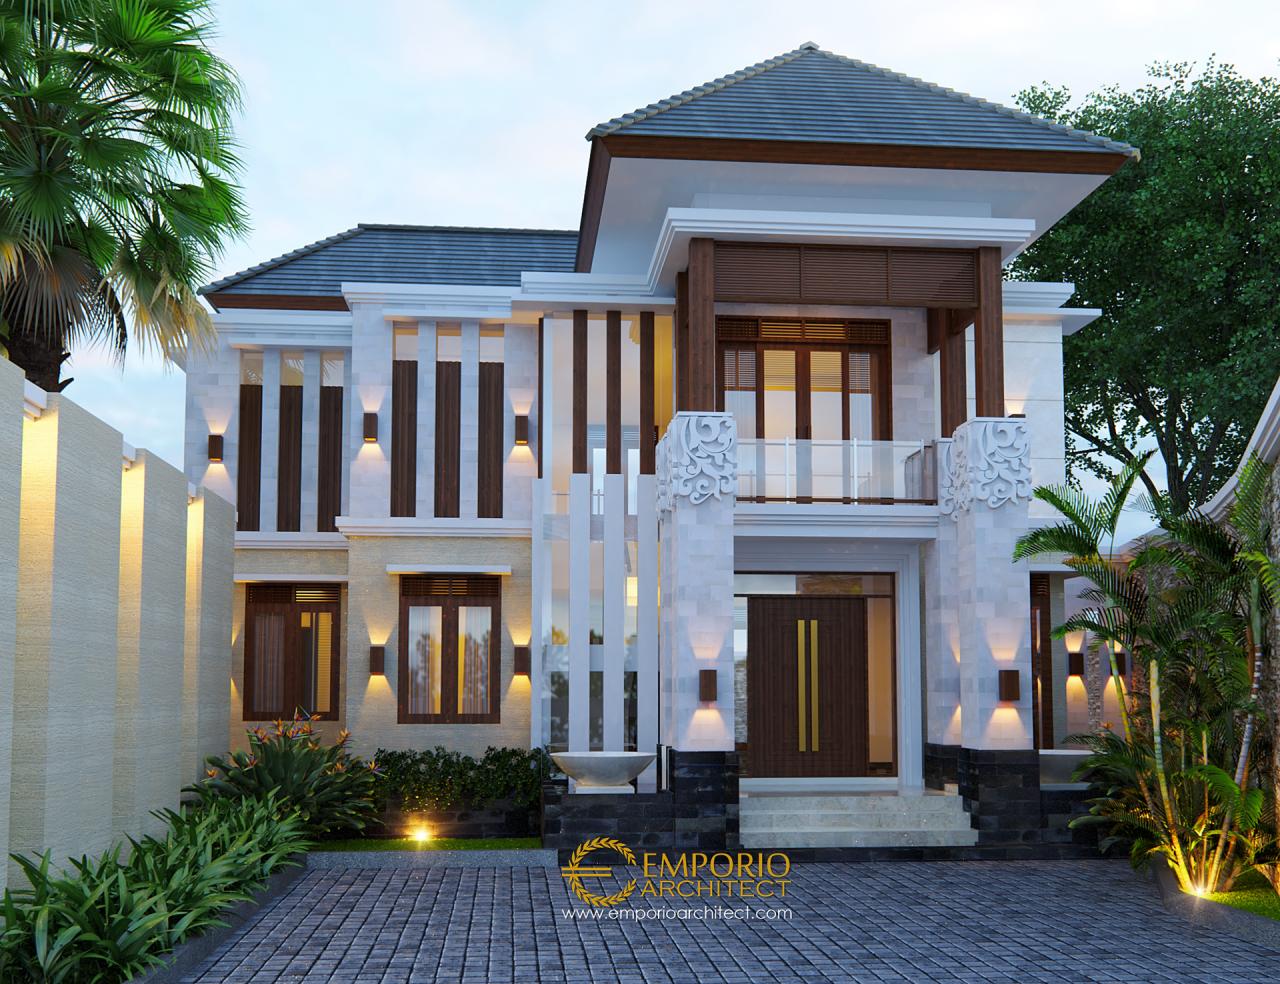  Desain  Rumah  Villa Bali 2 Lantai Ibu Tanti di Bandung 